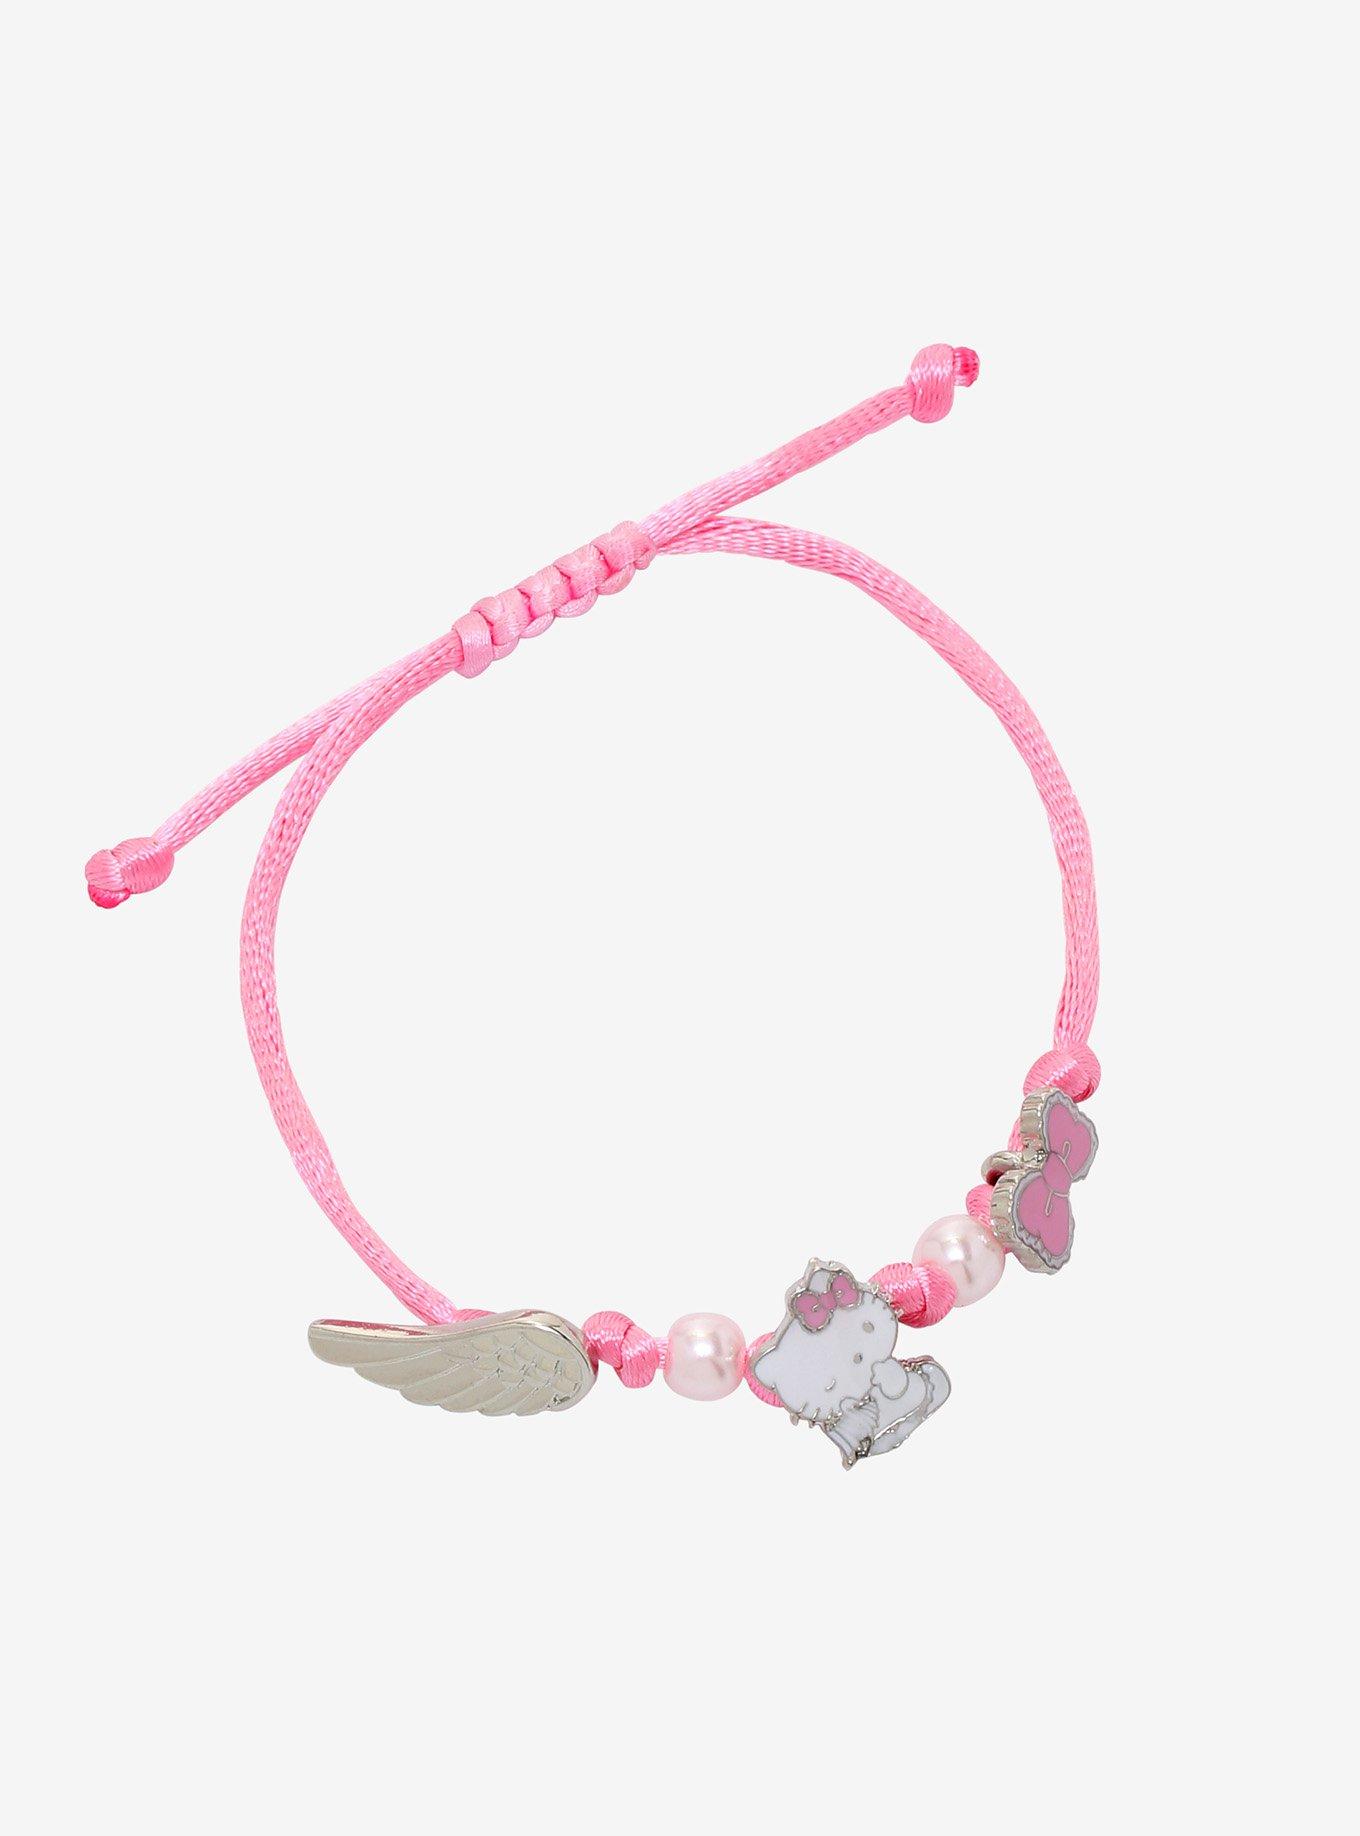 Hello Kitty Cat Bracelets